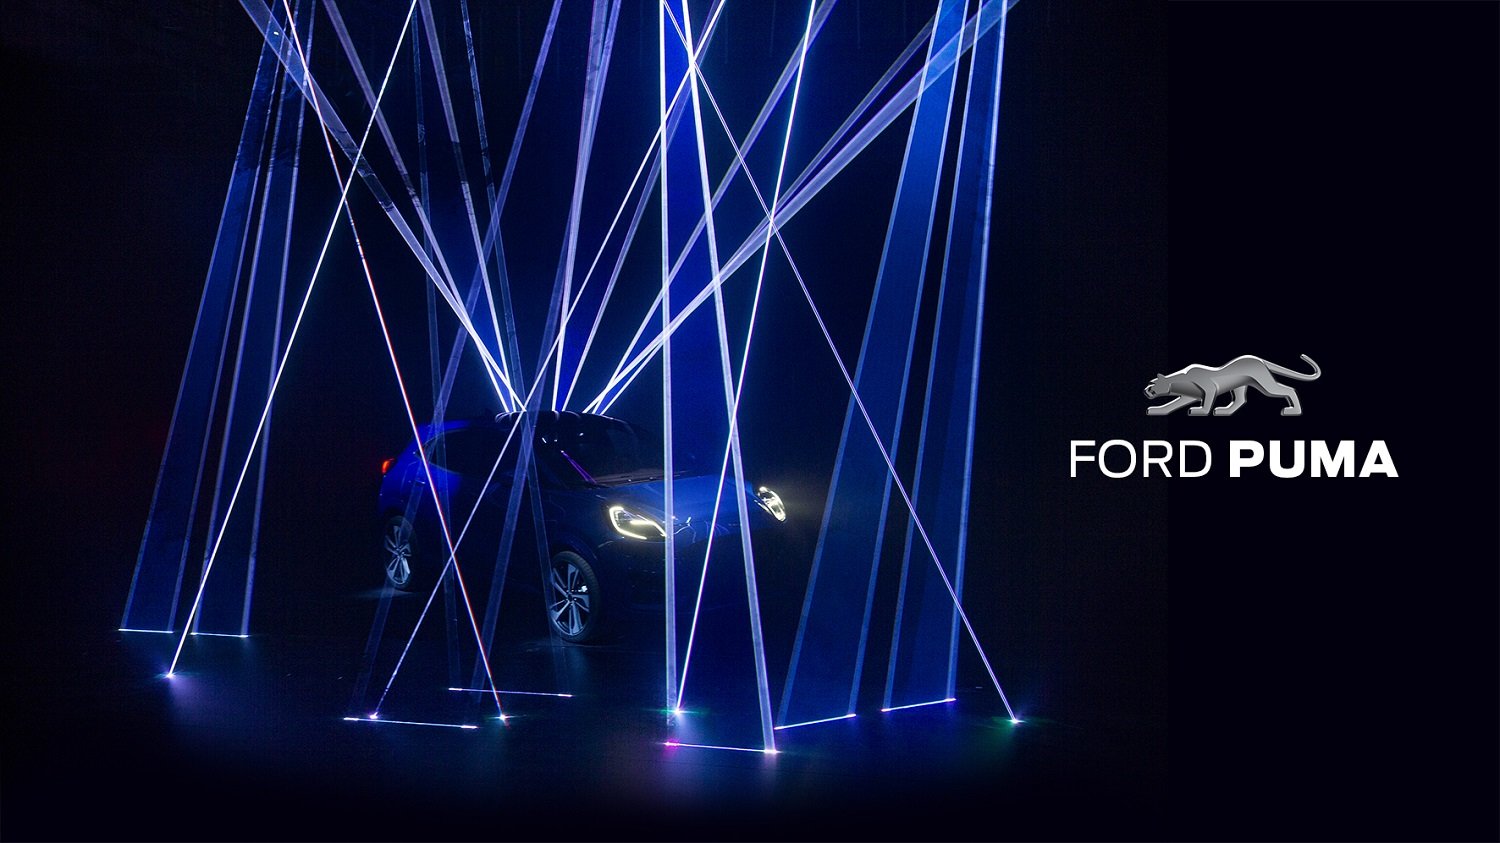 Ford poodhaluje novou generace modelu Puma